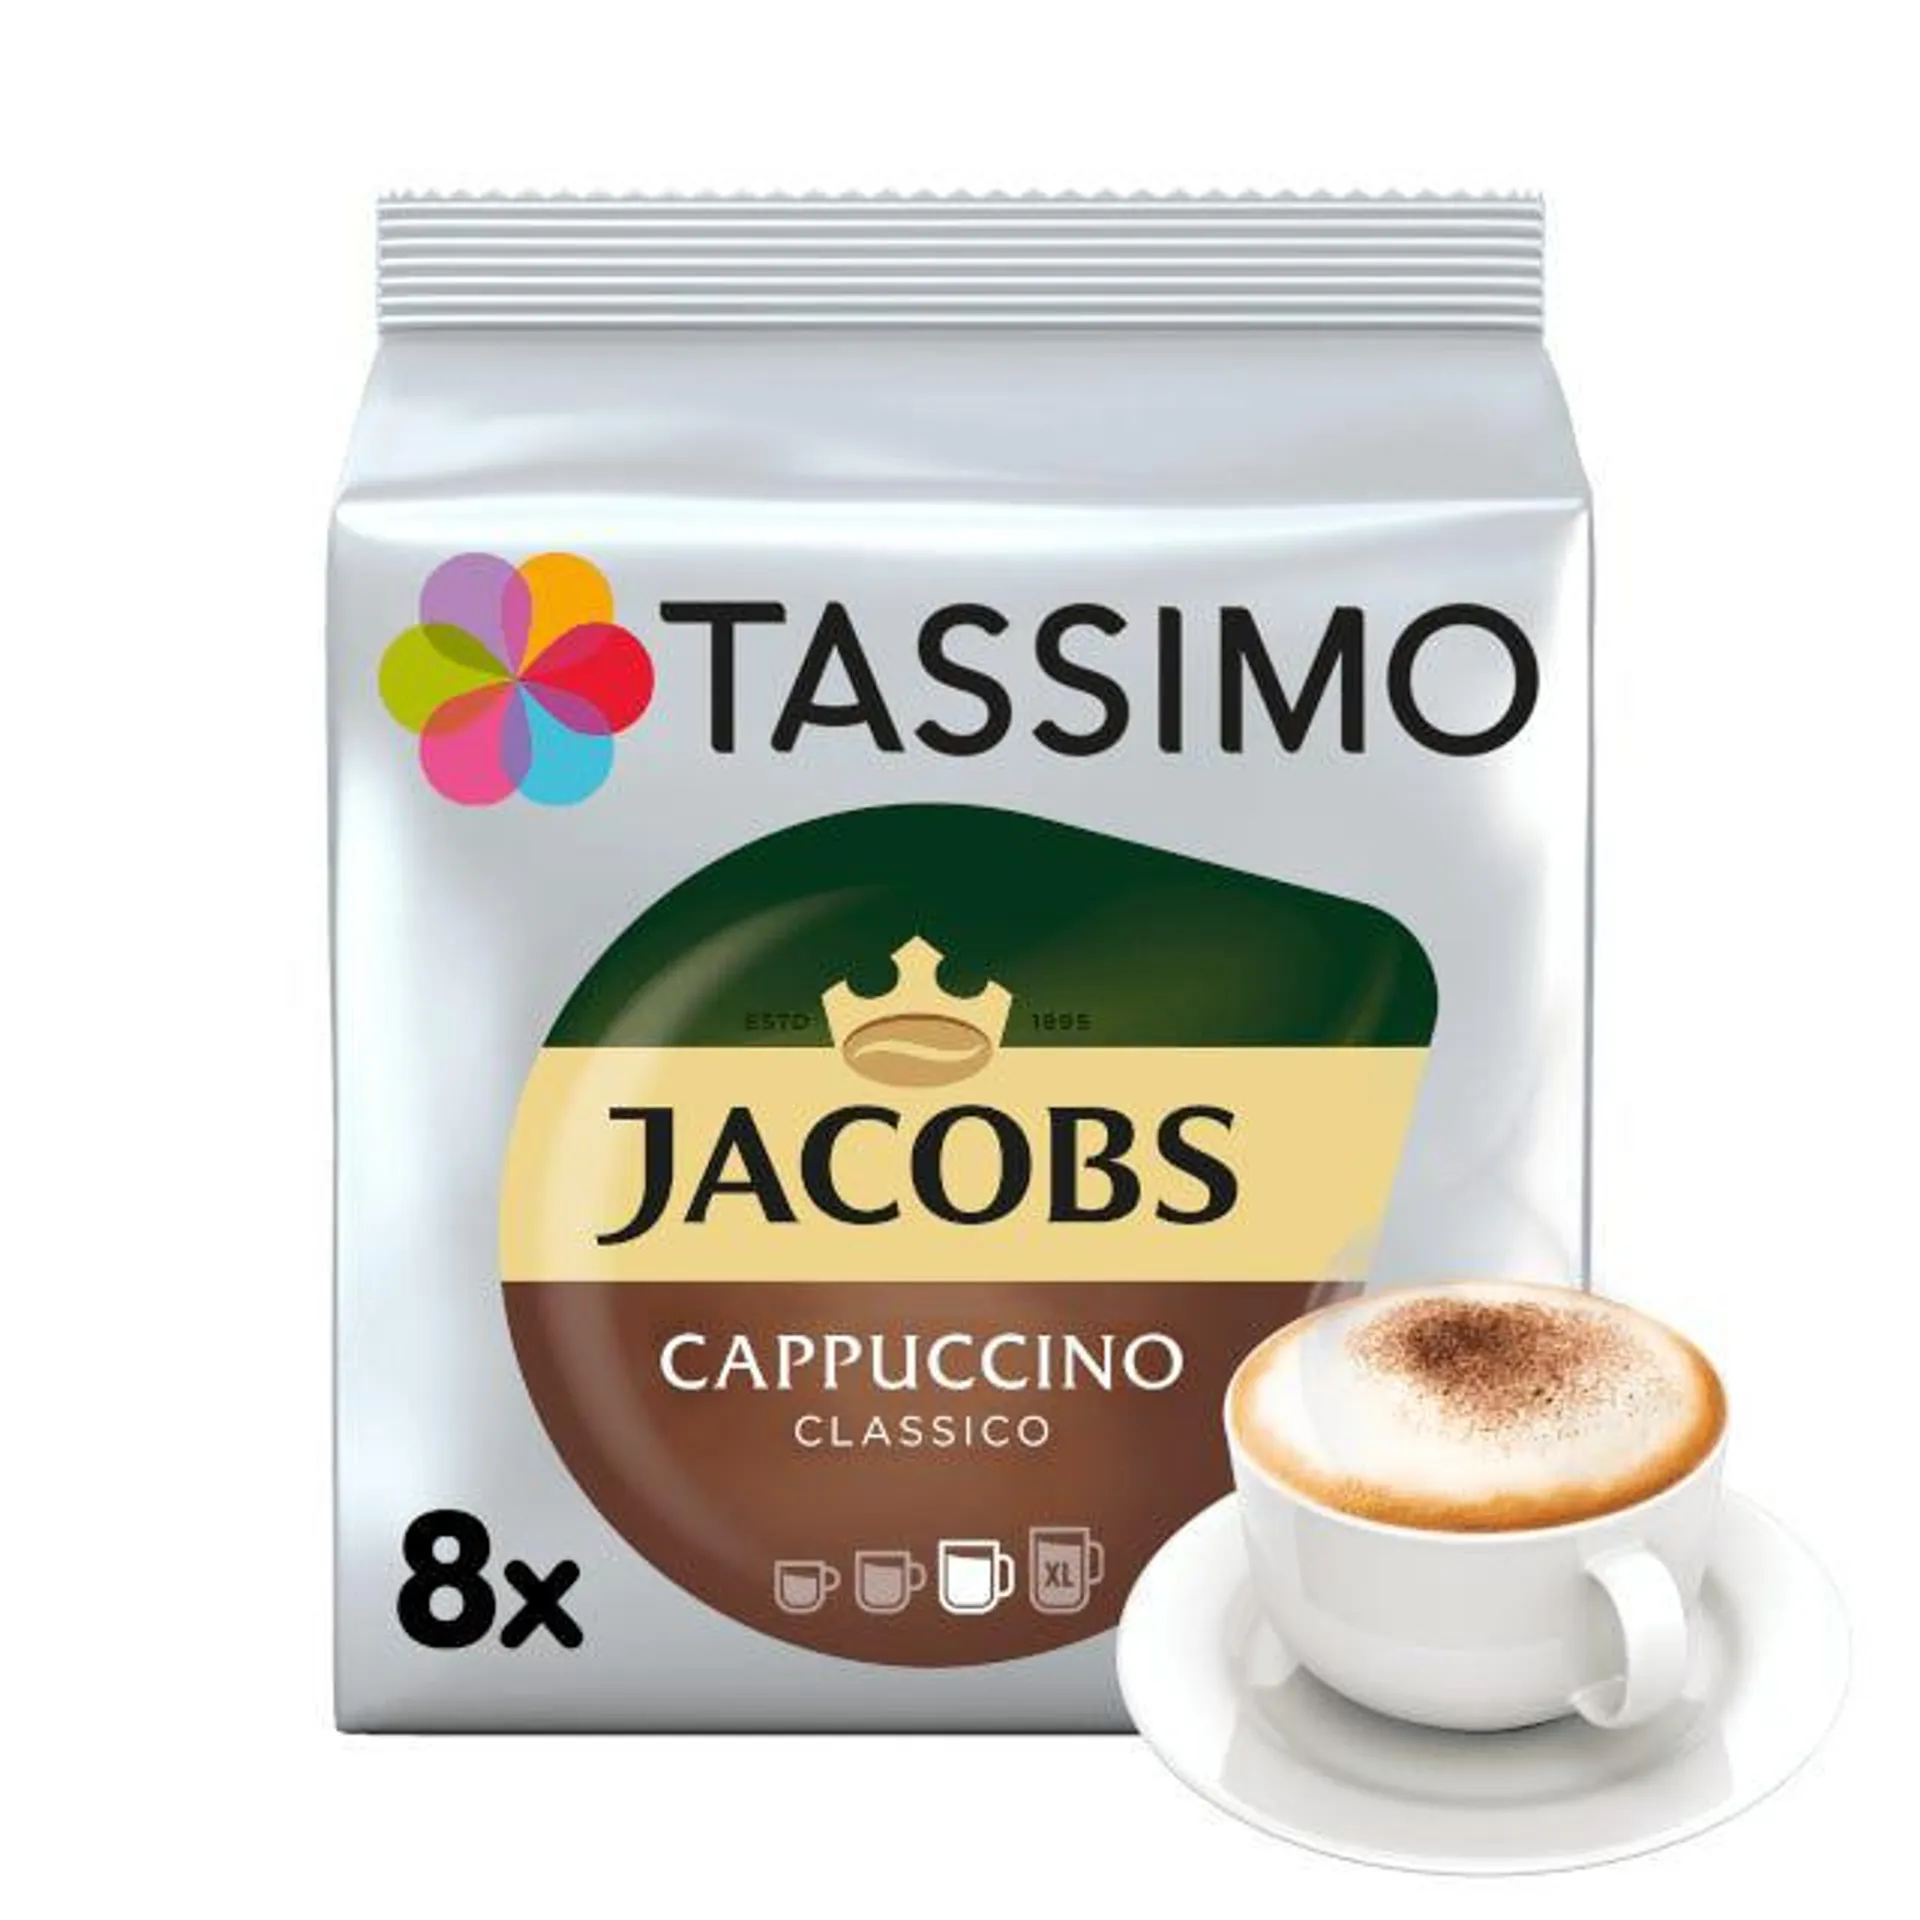 Jacobs Cappuccino Classico